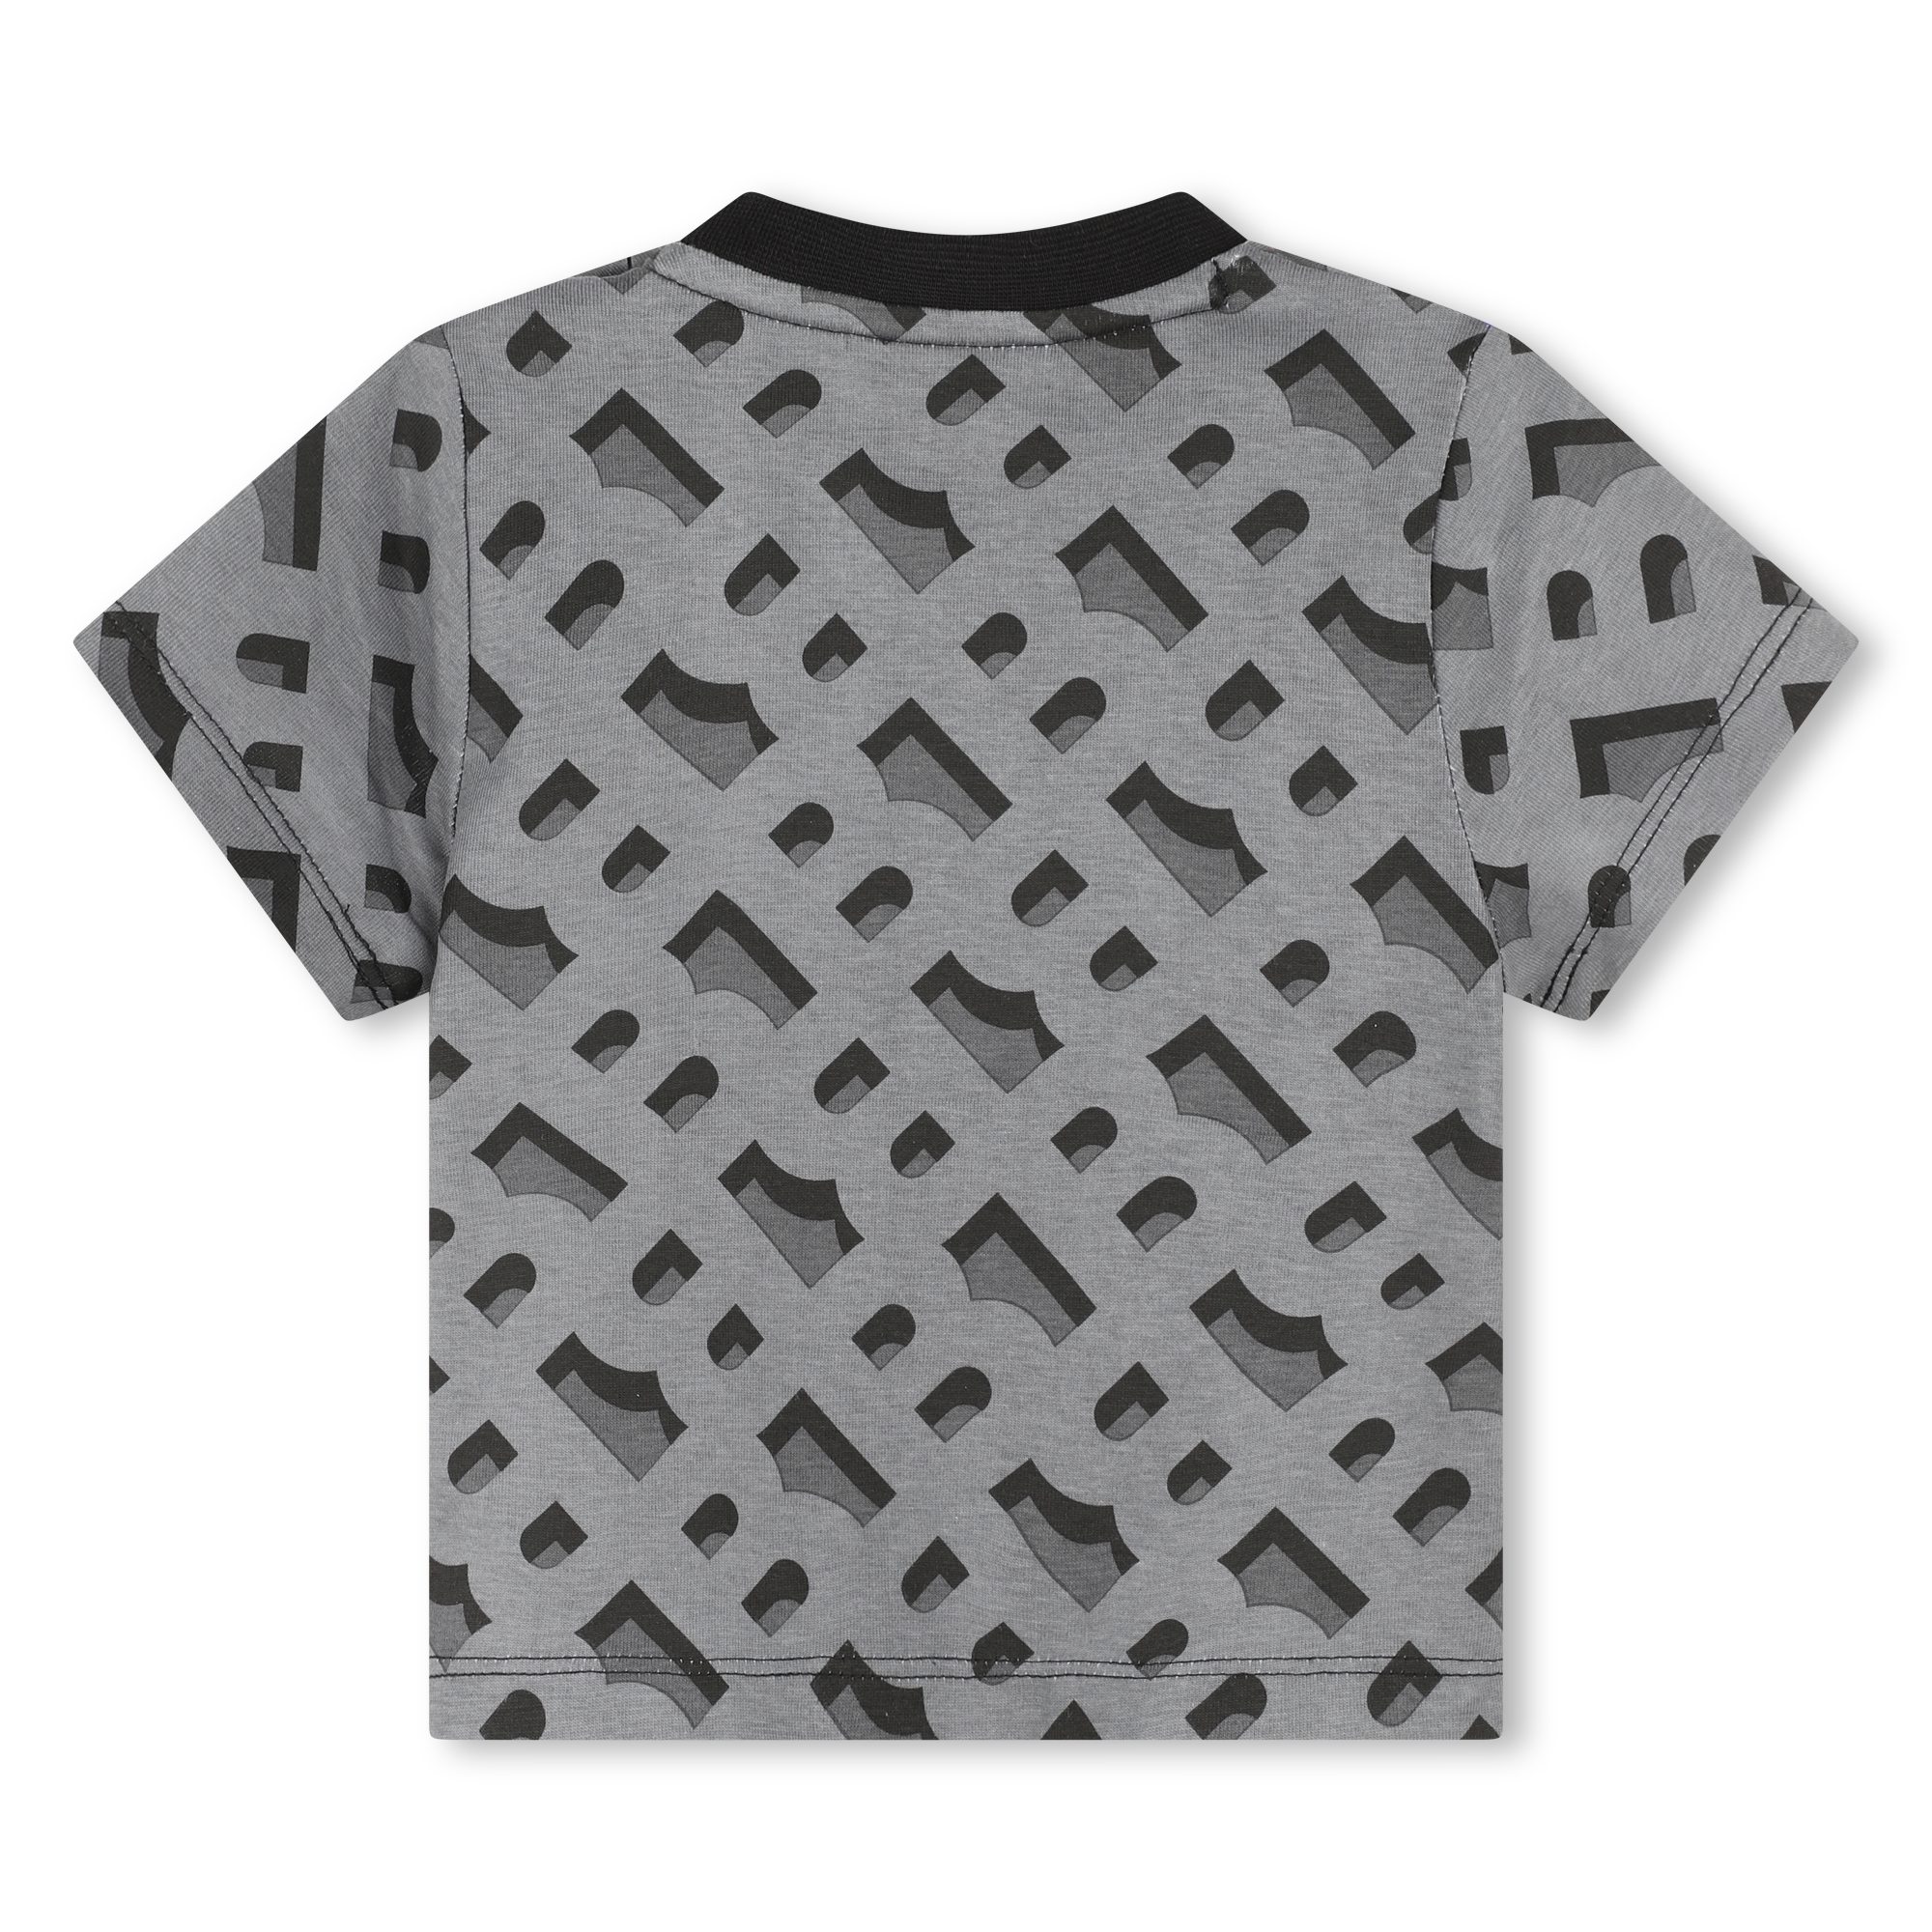 Printed cotton T-shirt BOSS for BOY